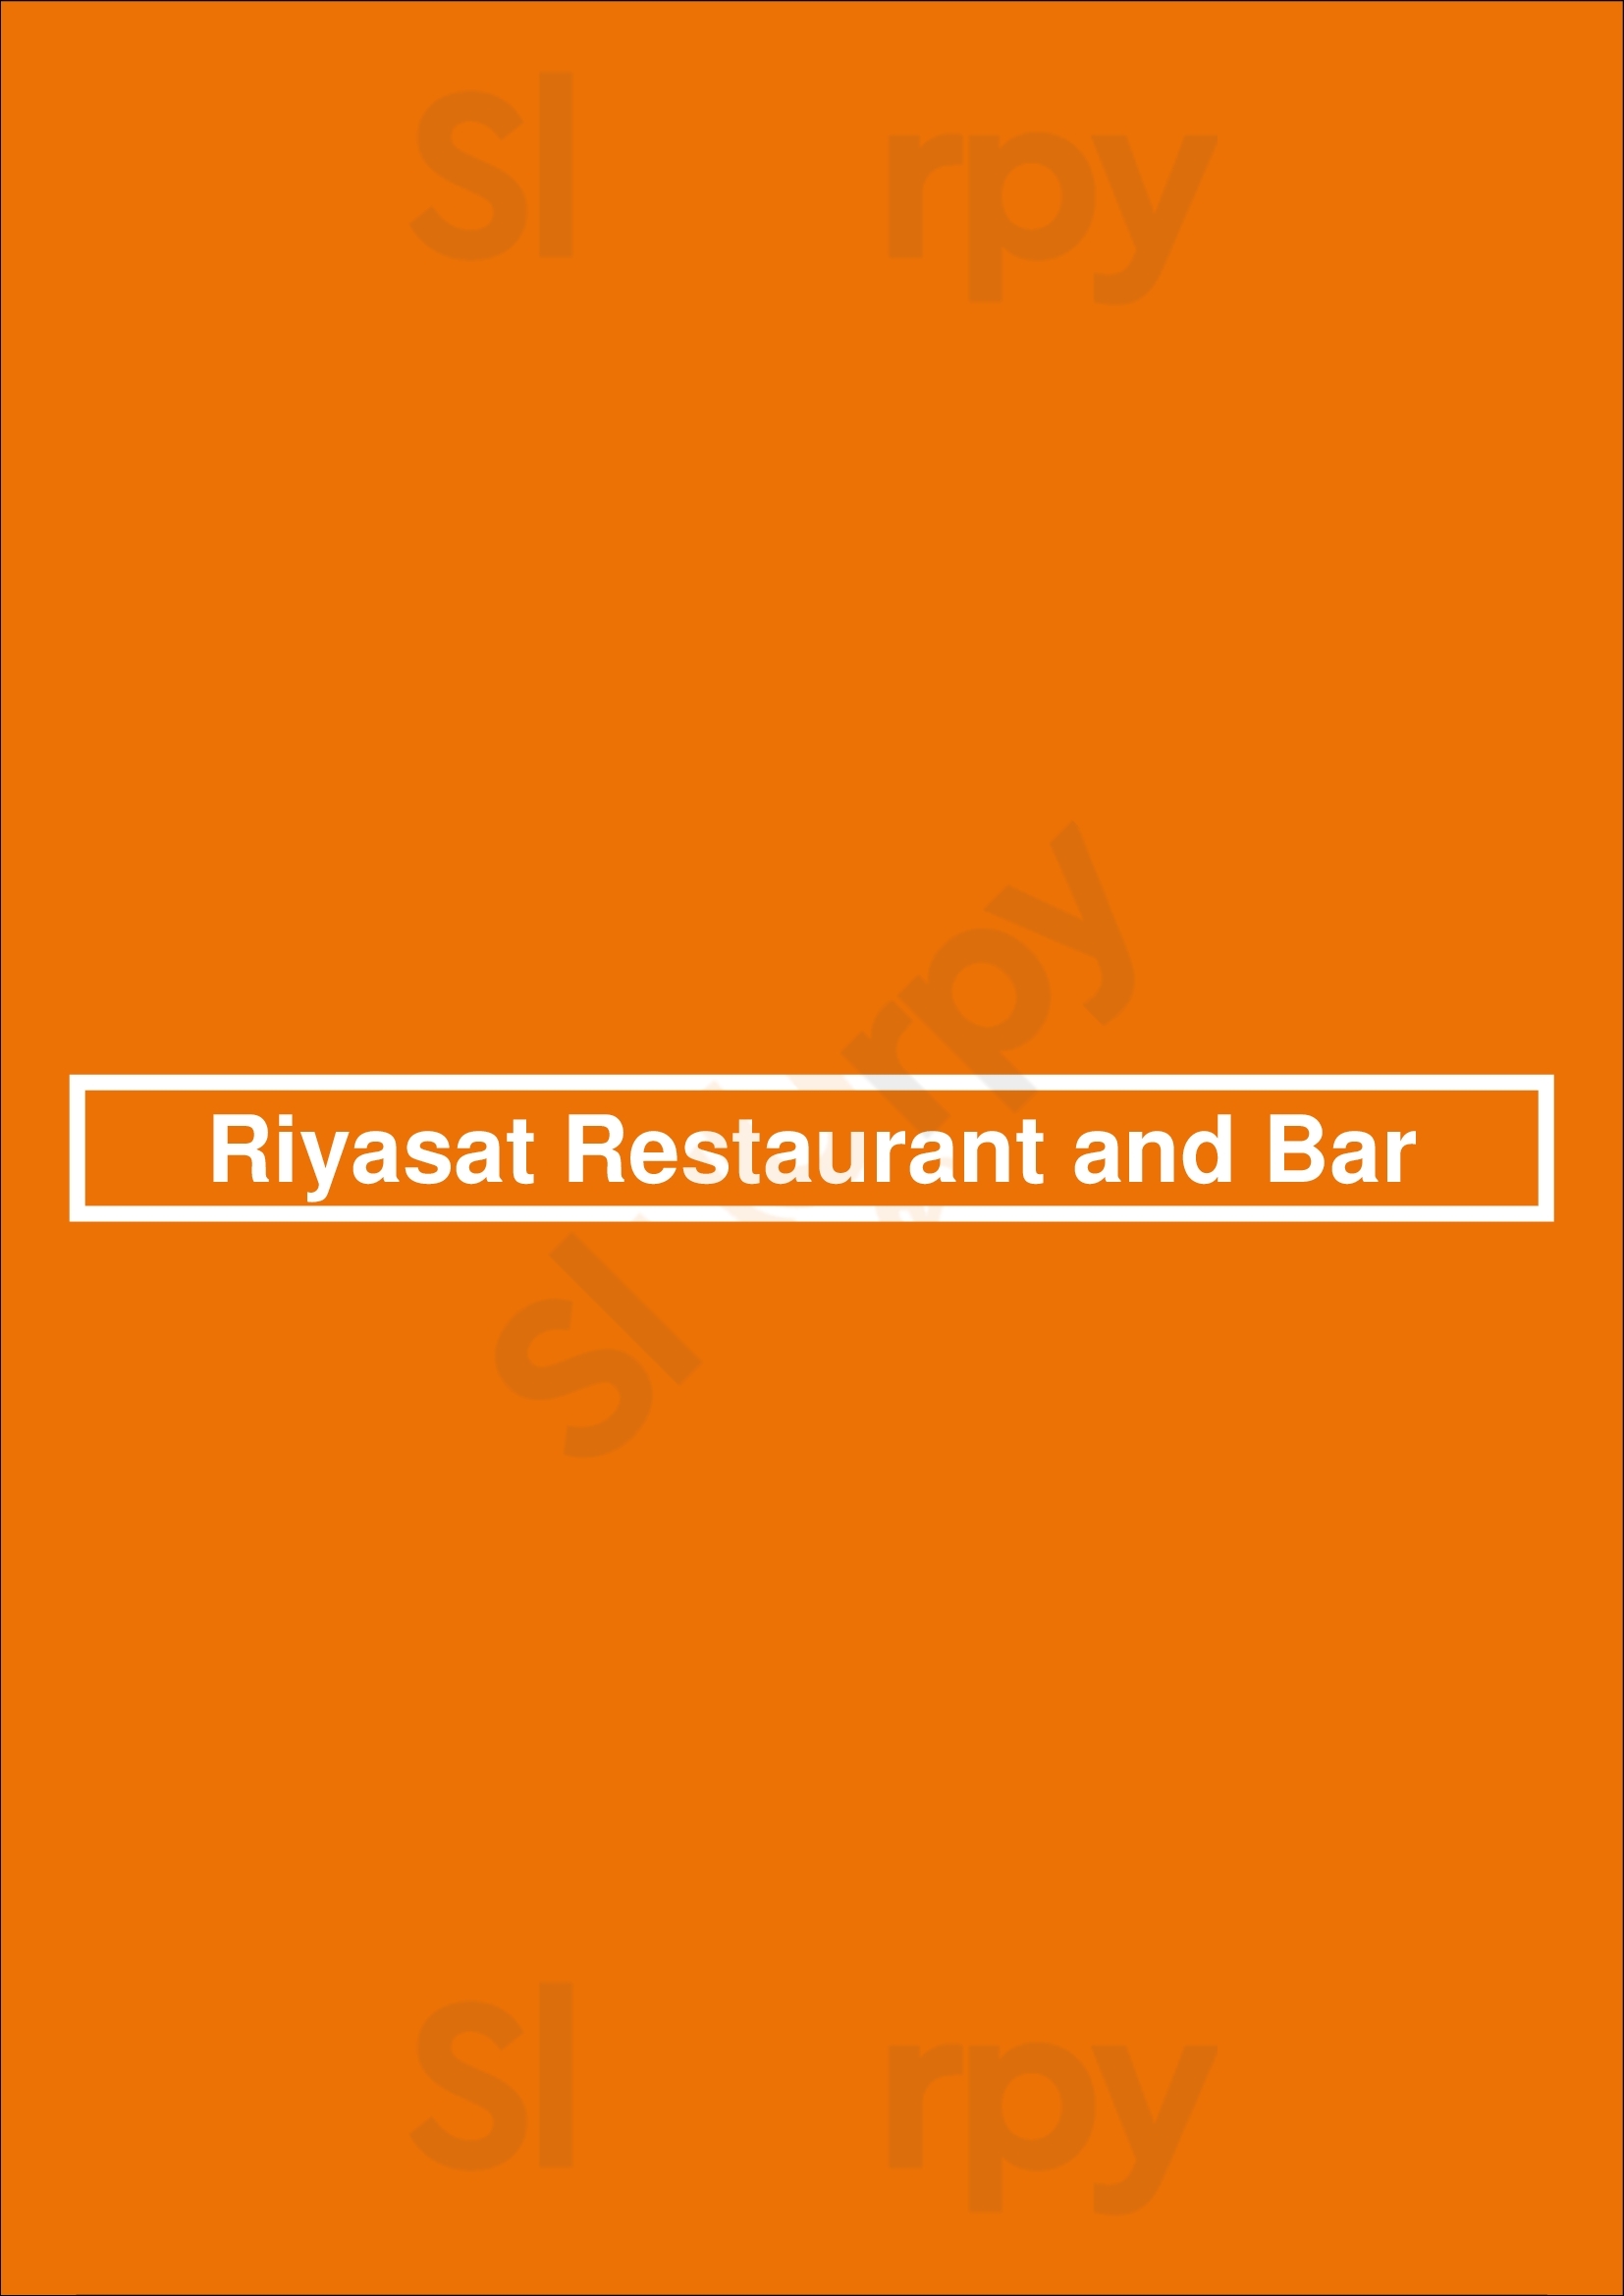 Riyasat Restaurant And Bar Oakville Menu - 1